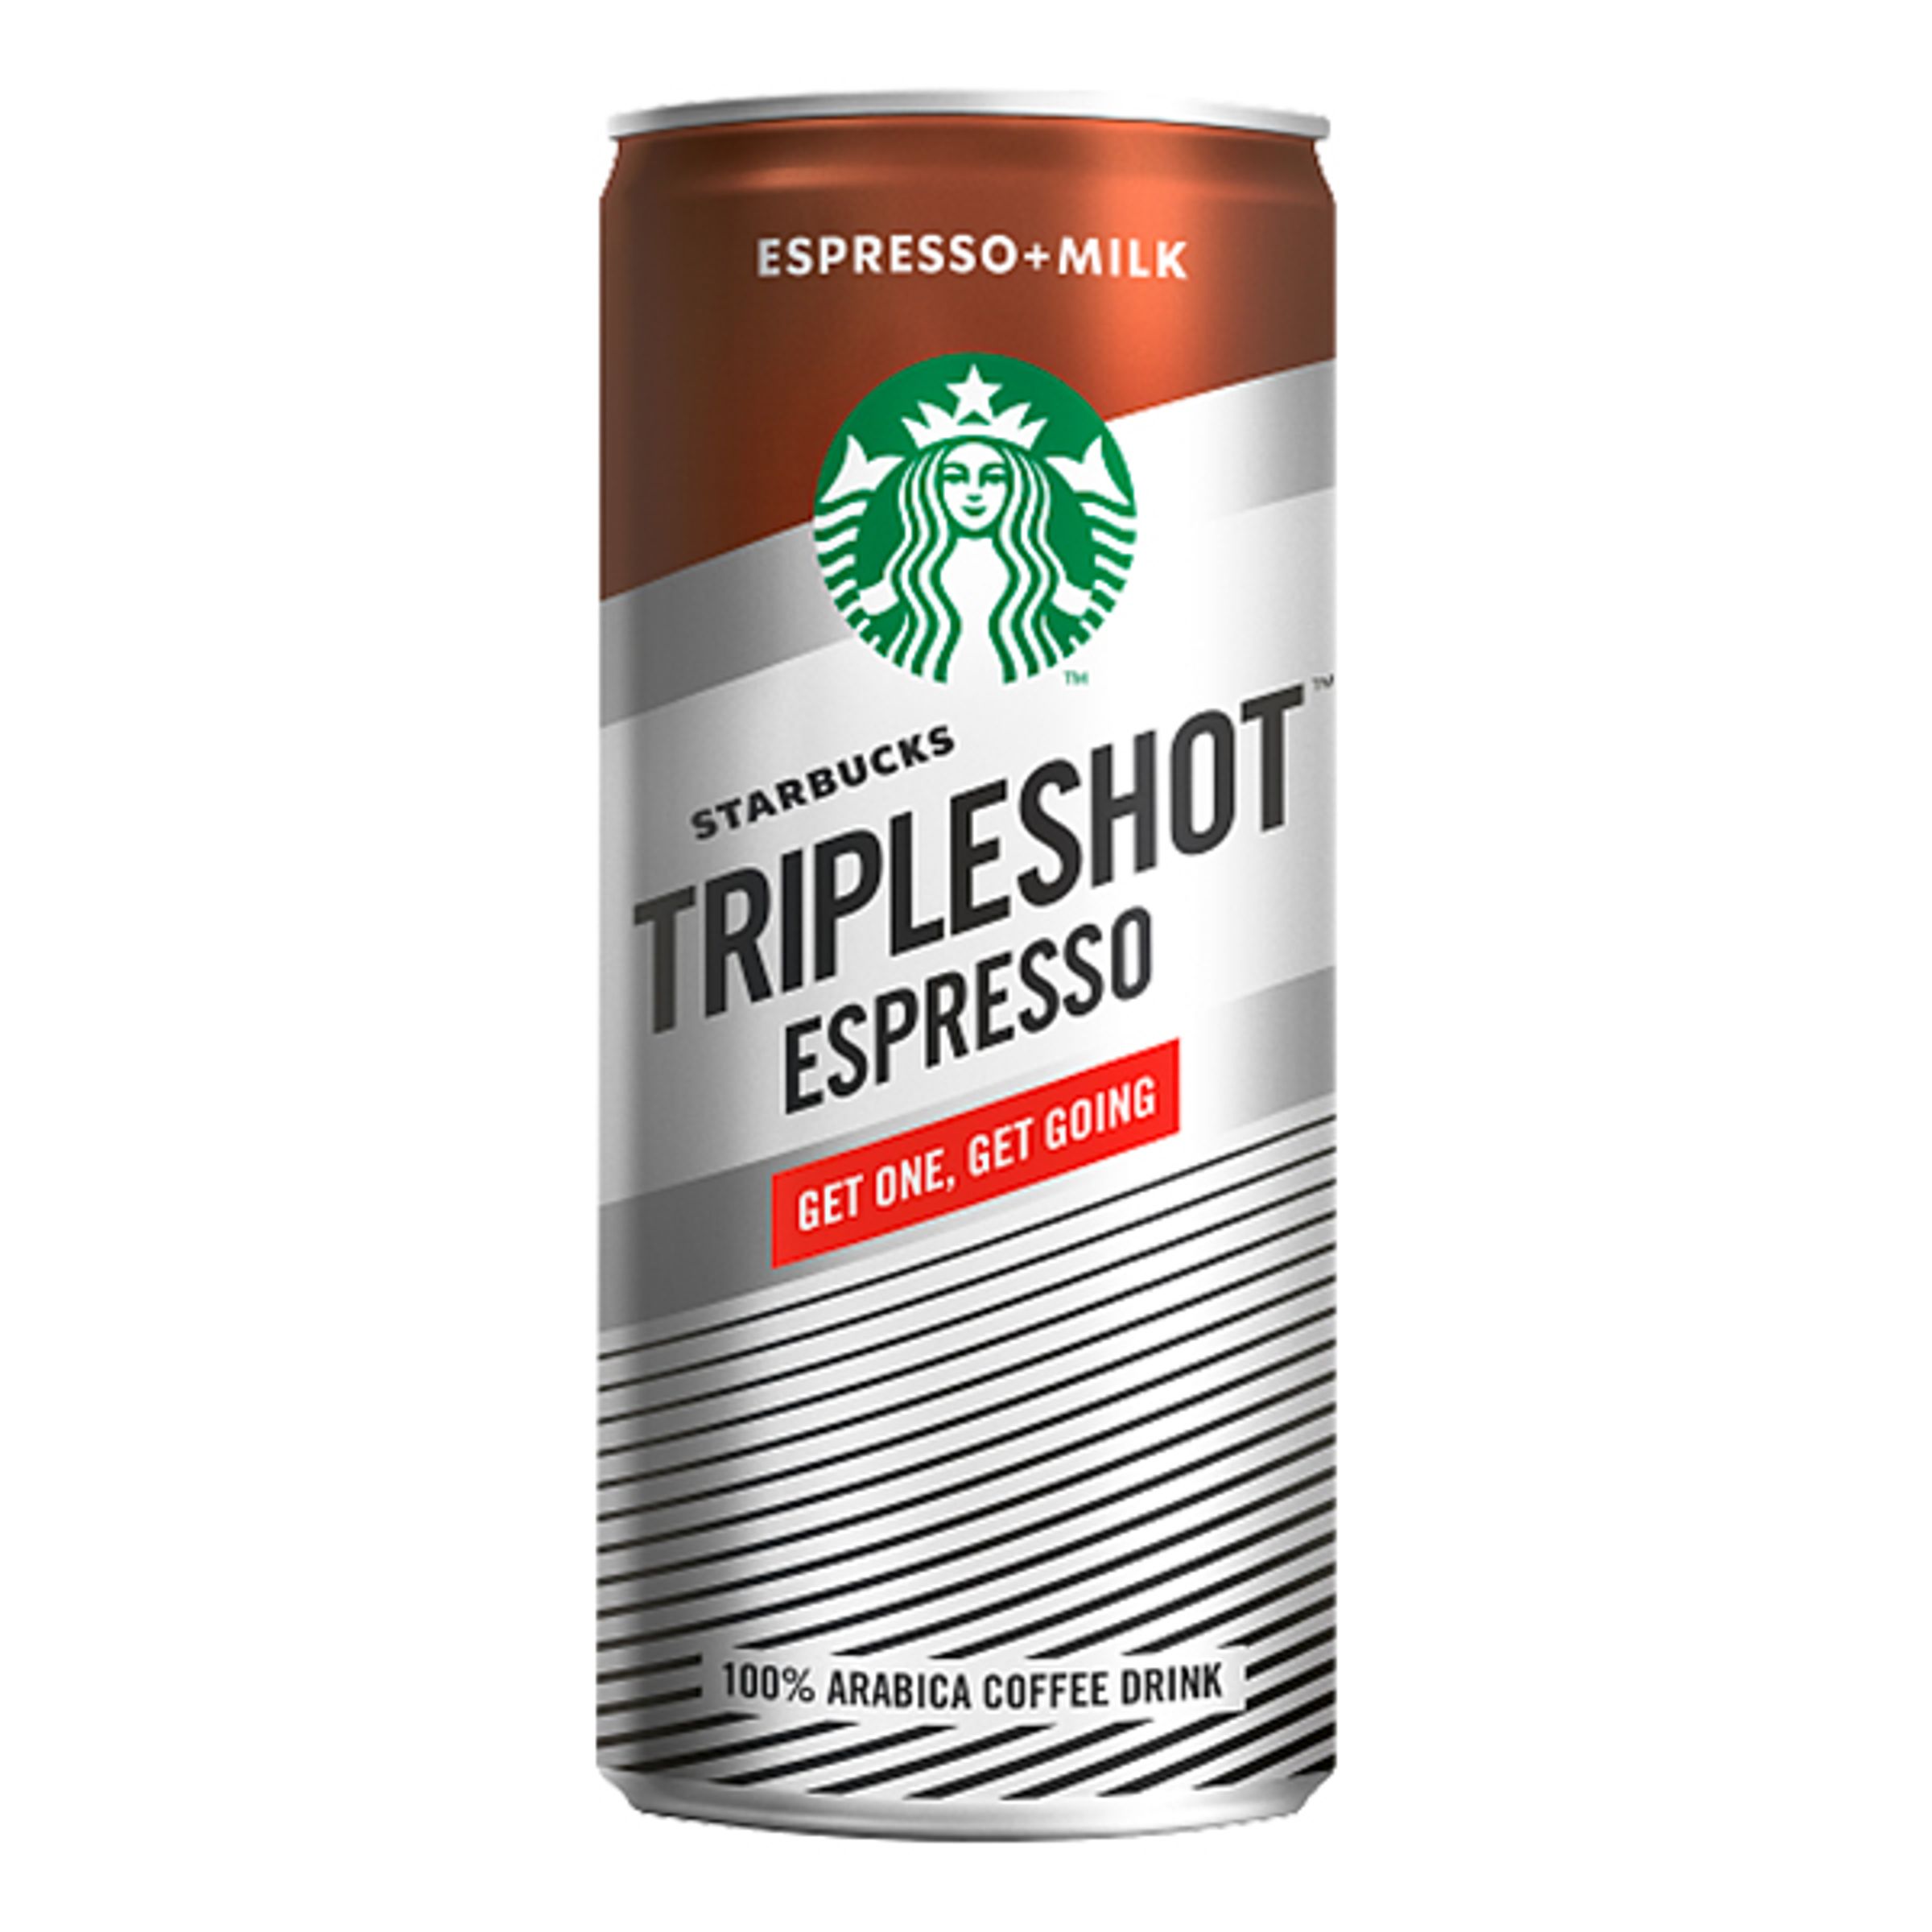 Starbucks Tripleshot Espresso - 1-pack